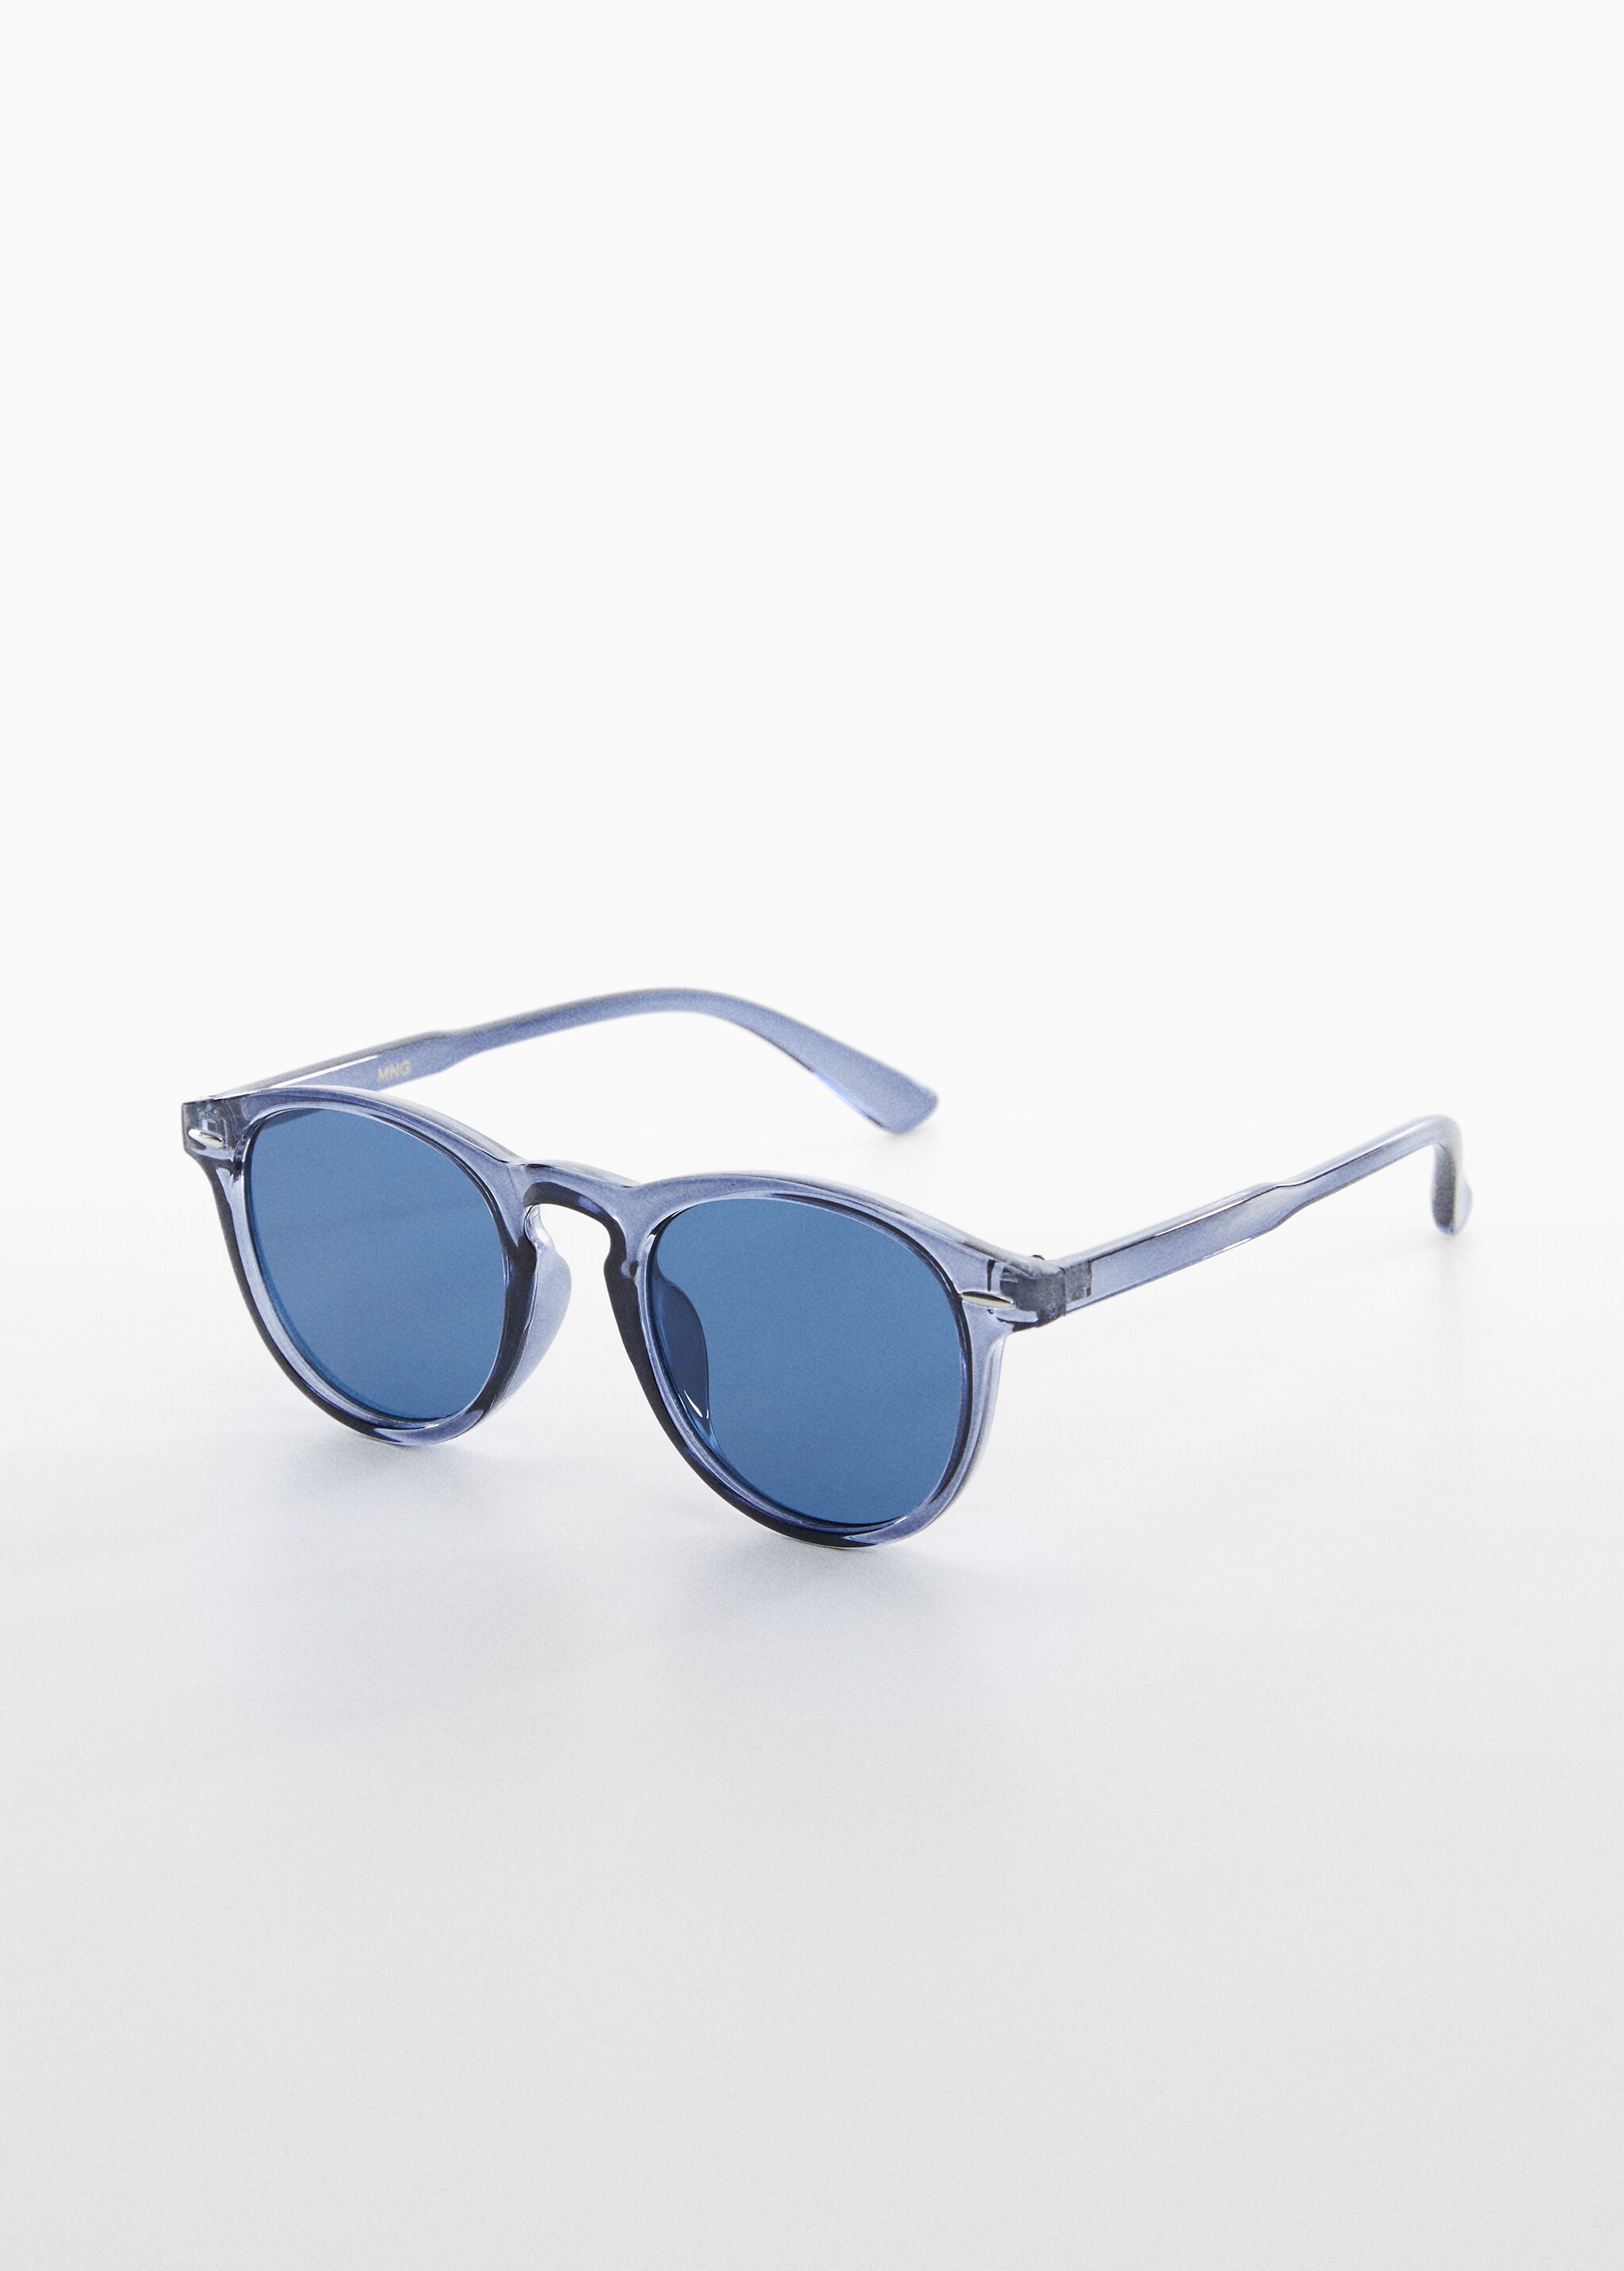 Acetate frame sunglasses - Middenvlak